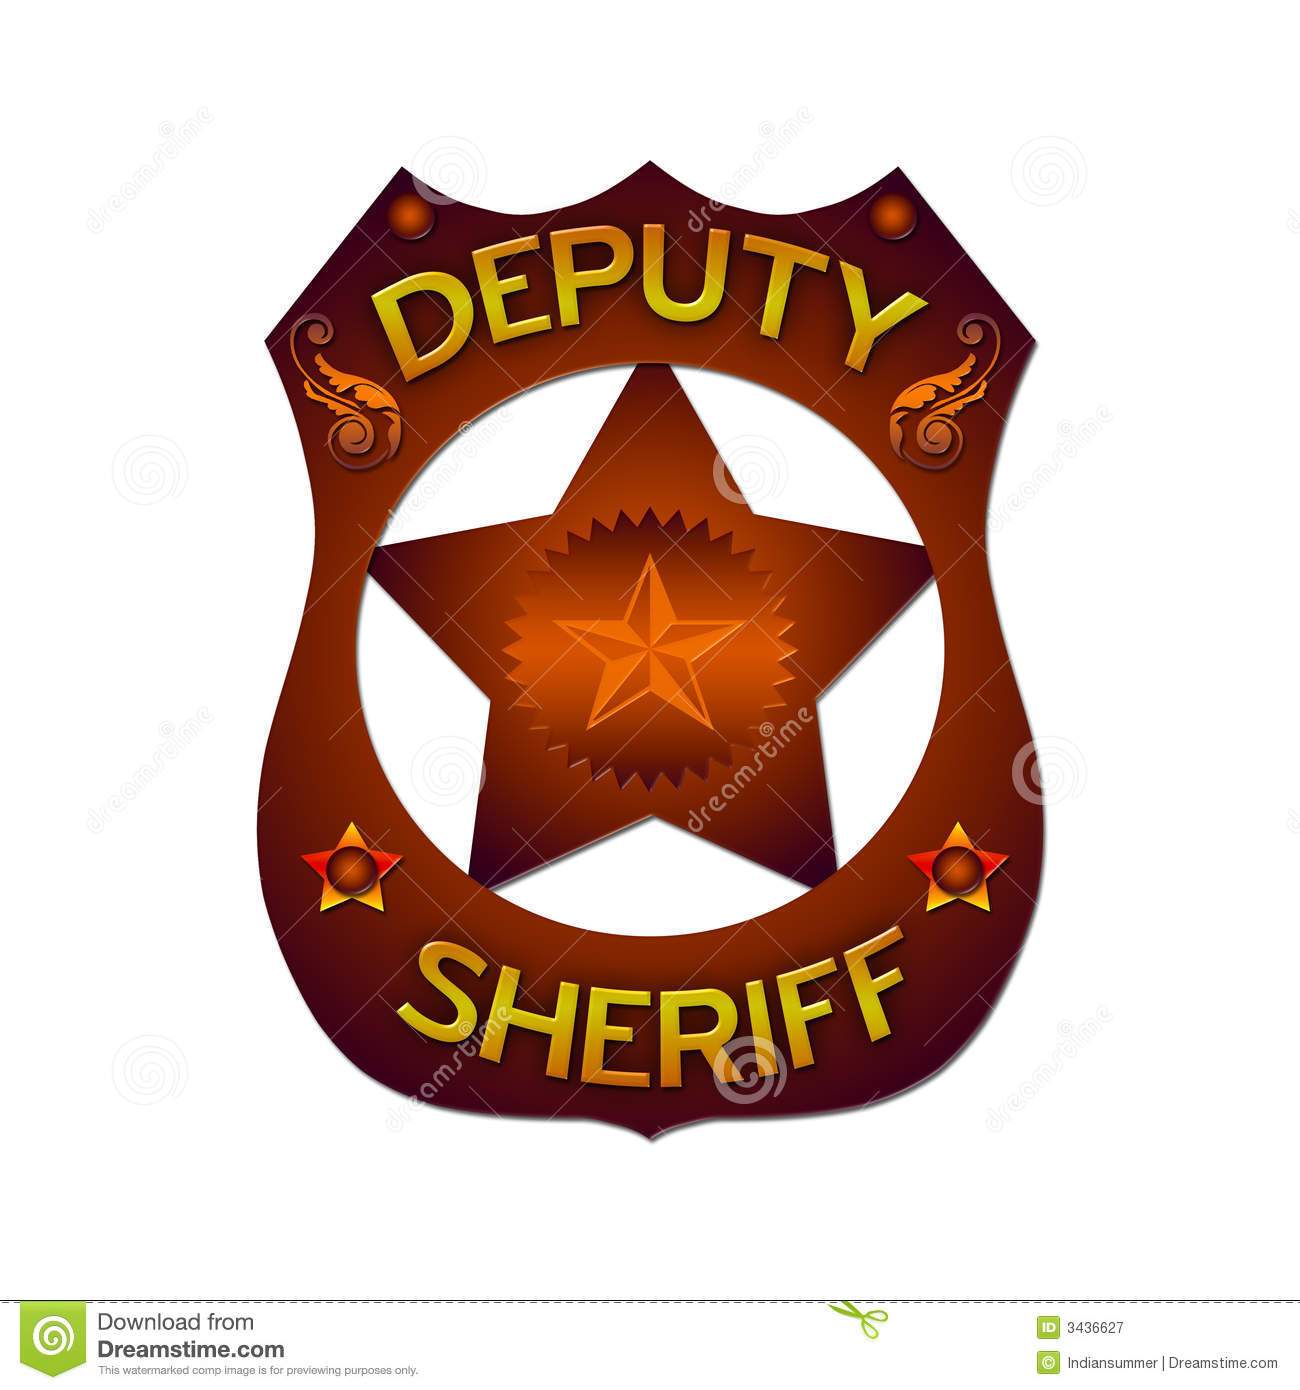 Deputy sheriff badge clipart 5 » Clipart Portal.